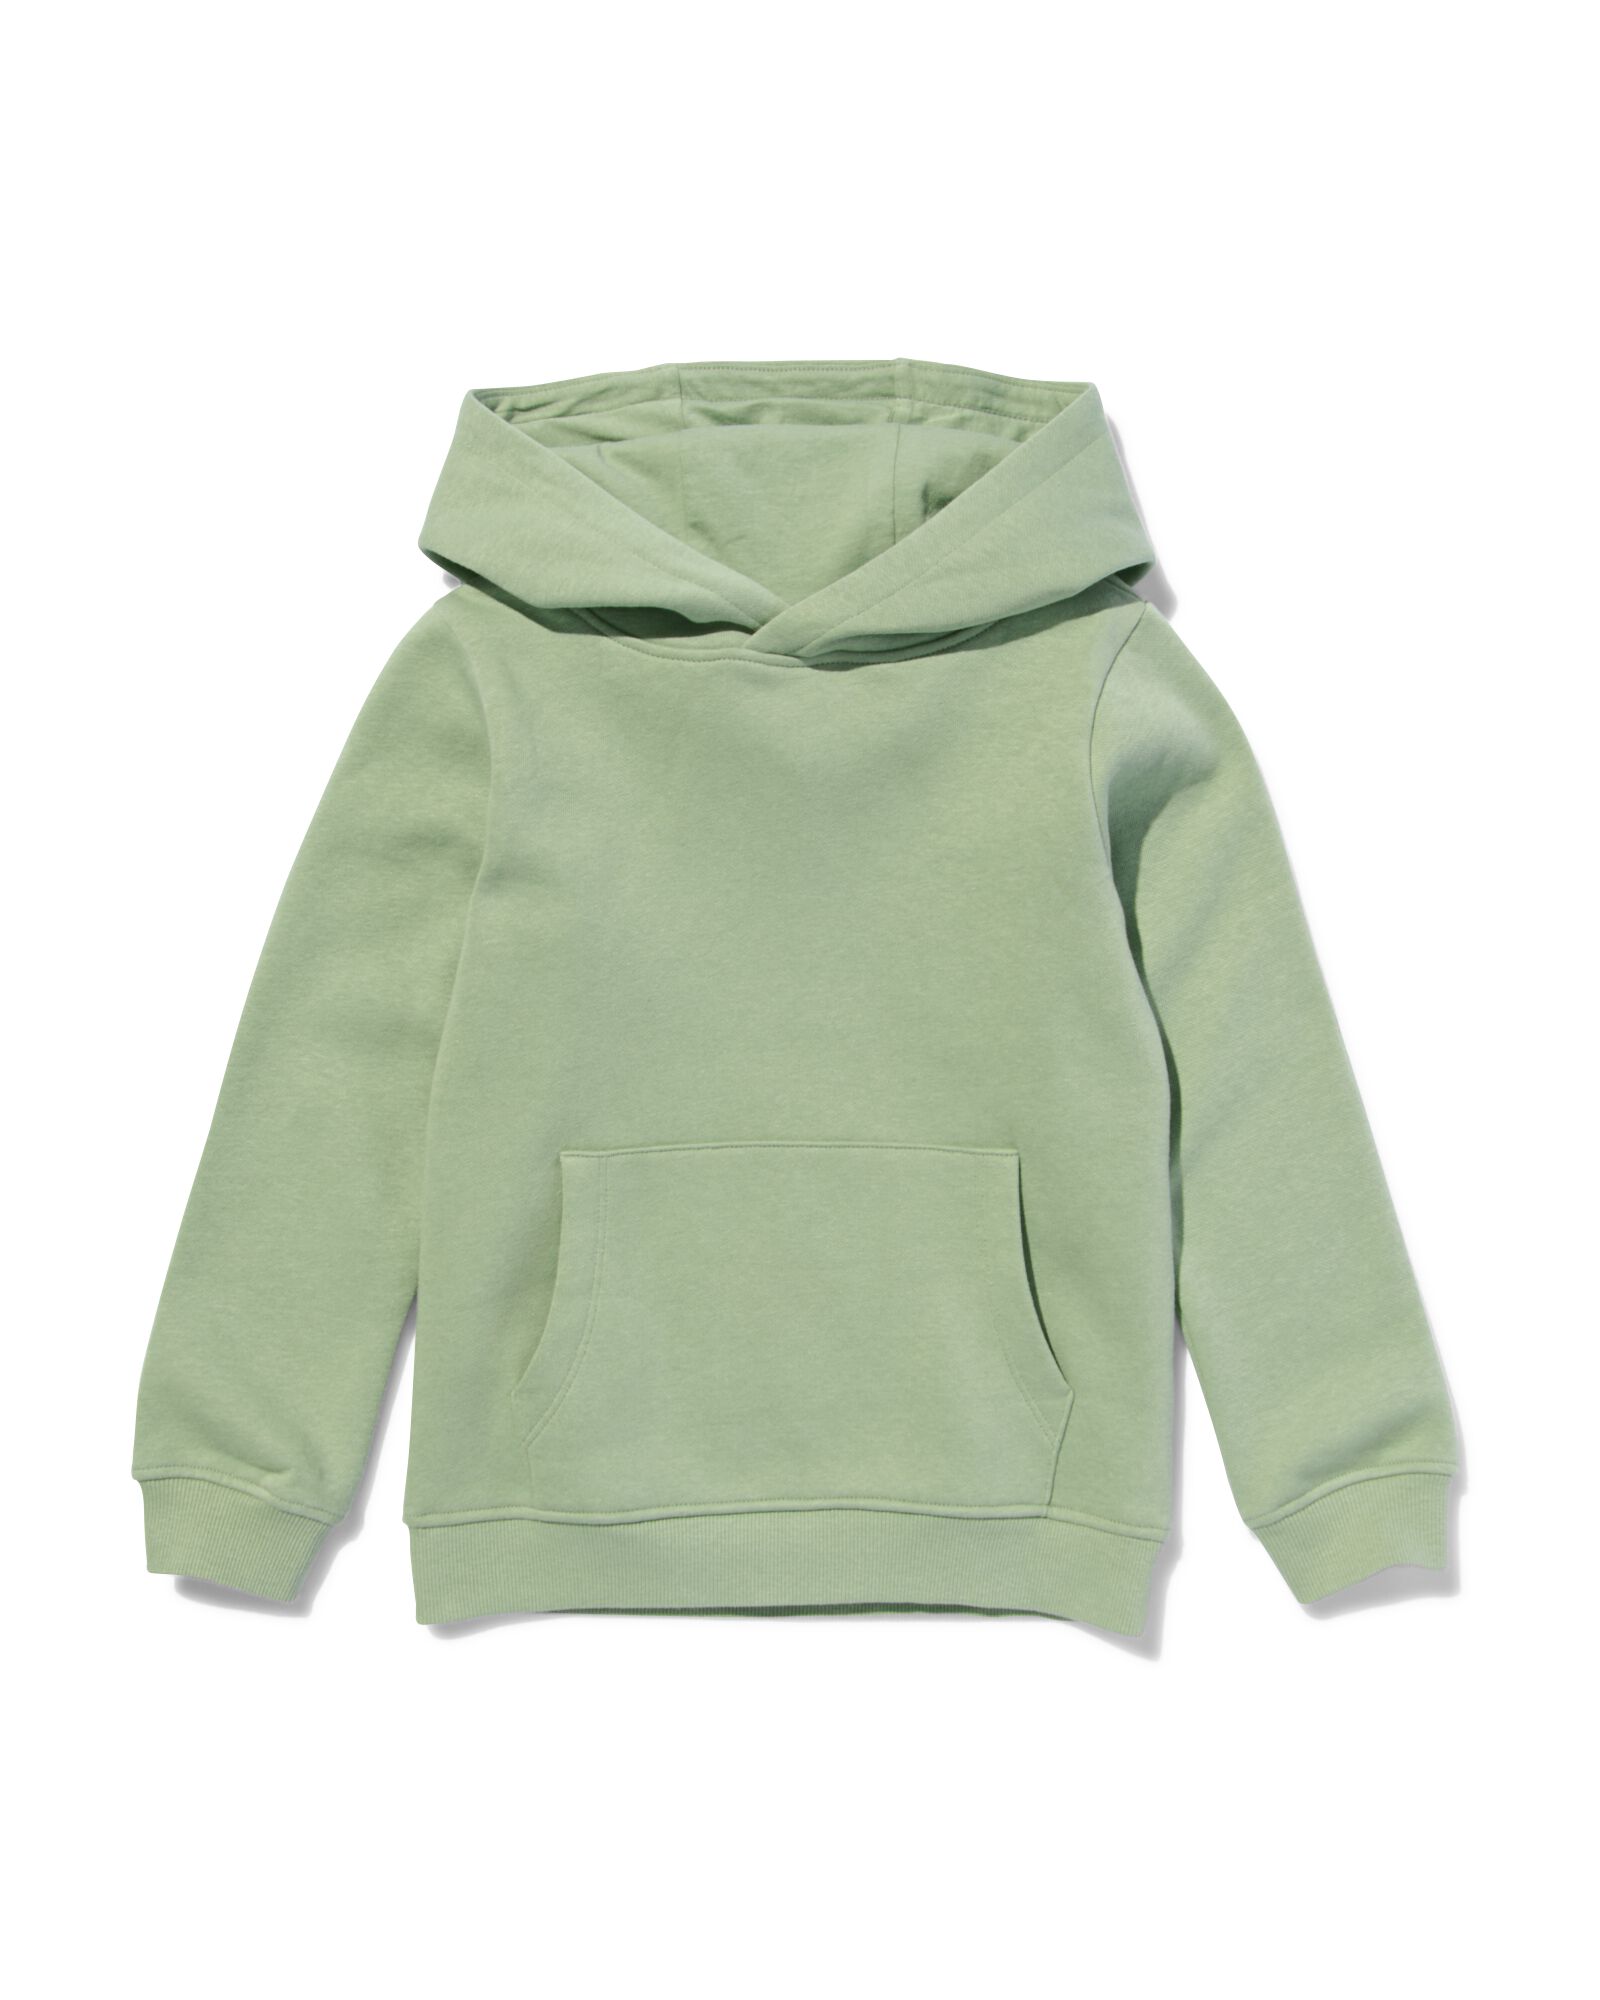 kinder hoodie met kangeroezak groen 146/152 - 30769432 - HEMA